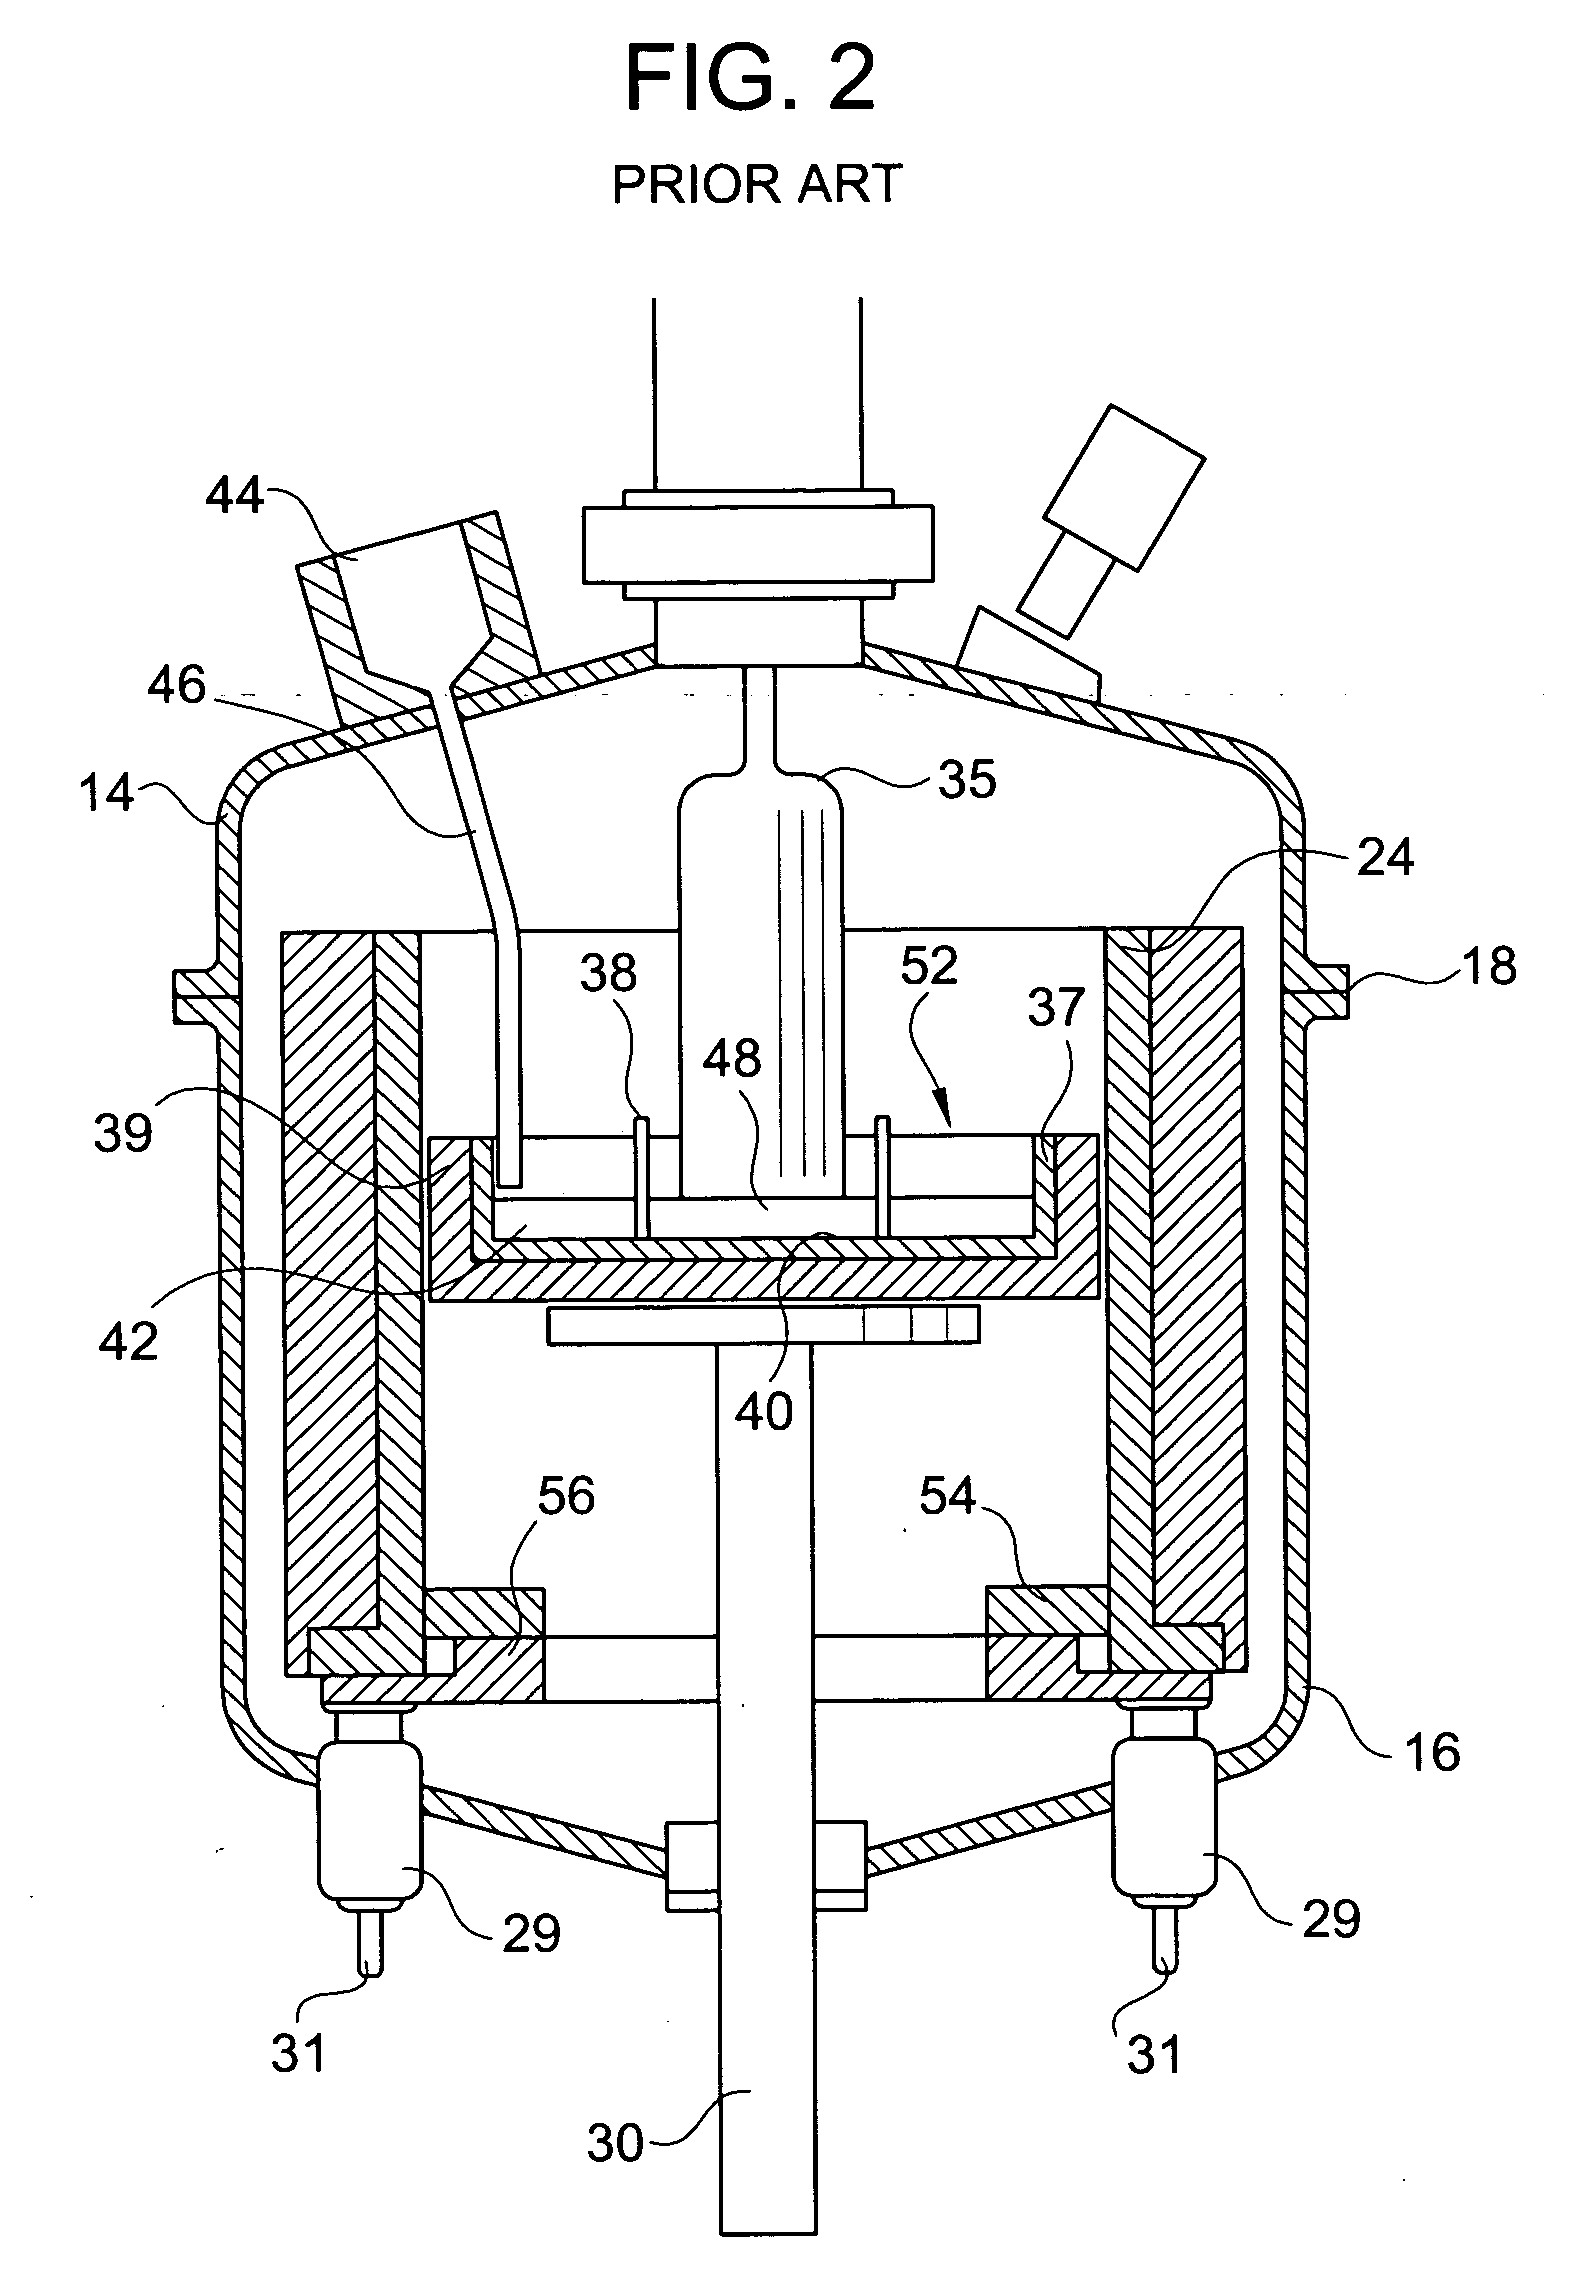 Method and apparatus to produce single crystal ingot of uniform axial resistivity